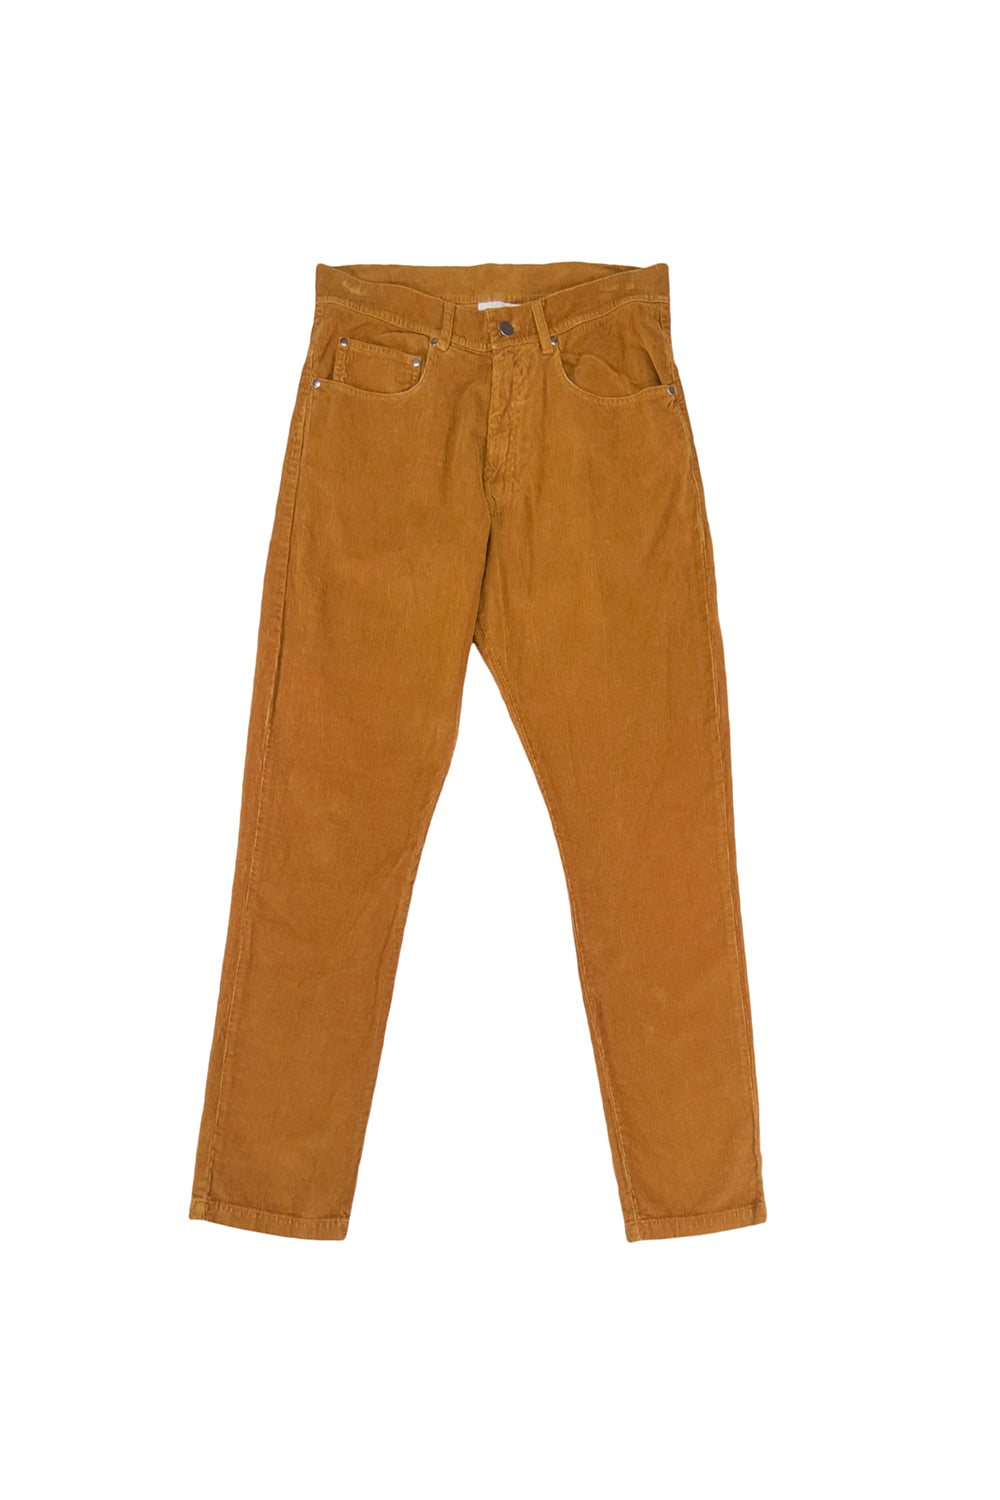 Wellfleet Pant | Jungmaven Hemp Clothing & Accessories / Color: Copper